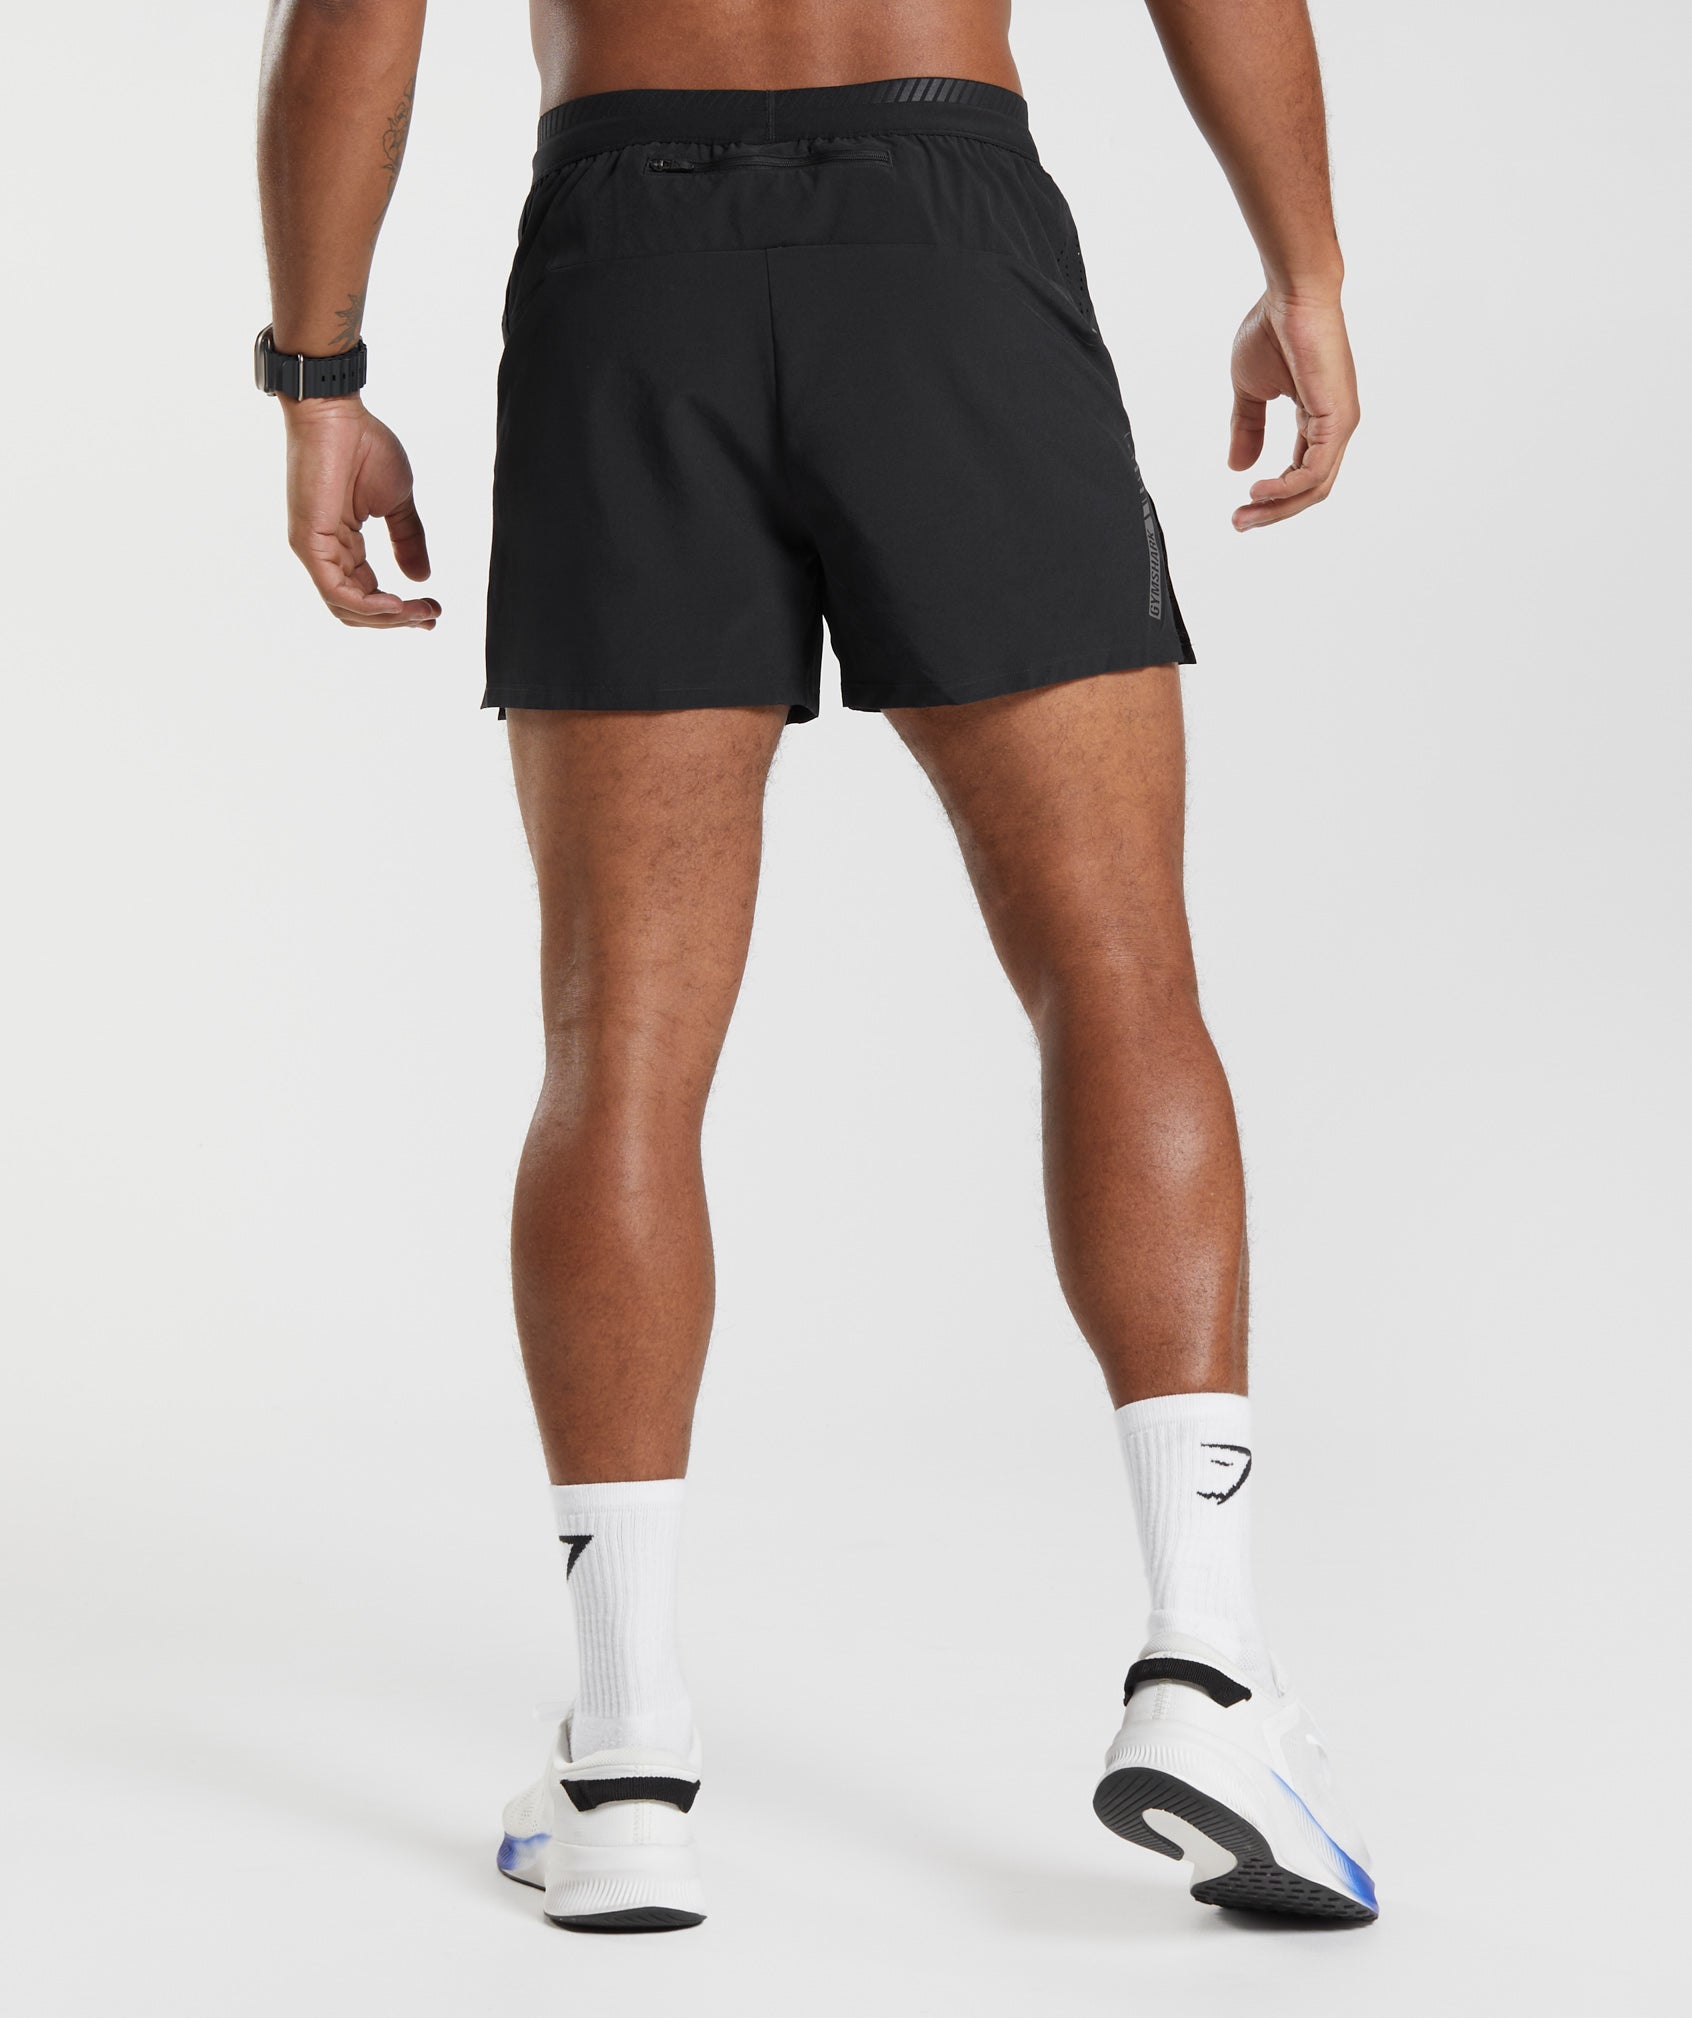 Baller Babe Shorts with Pocket - Nude Colour S-XL Activewear